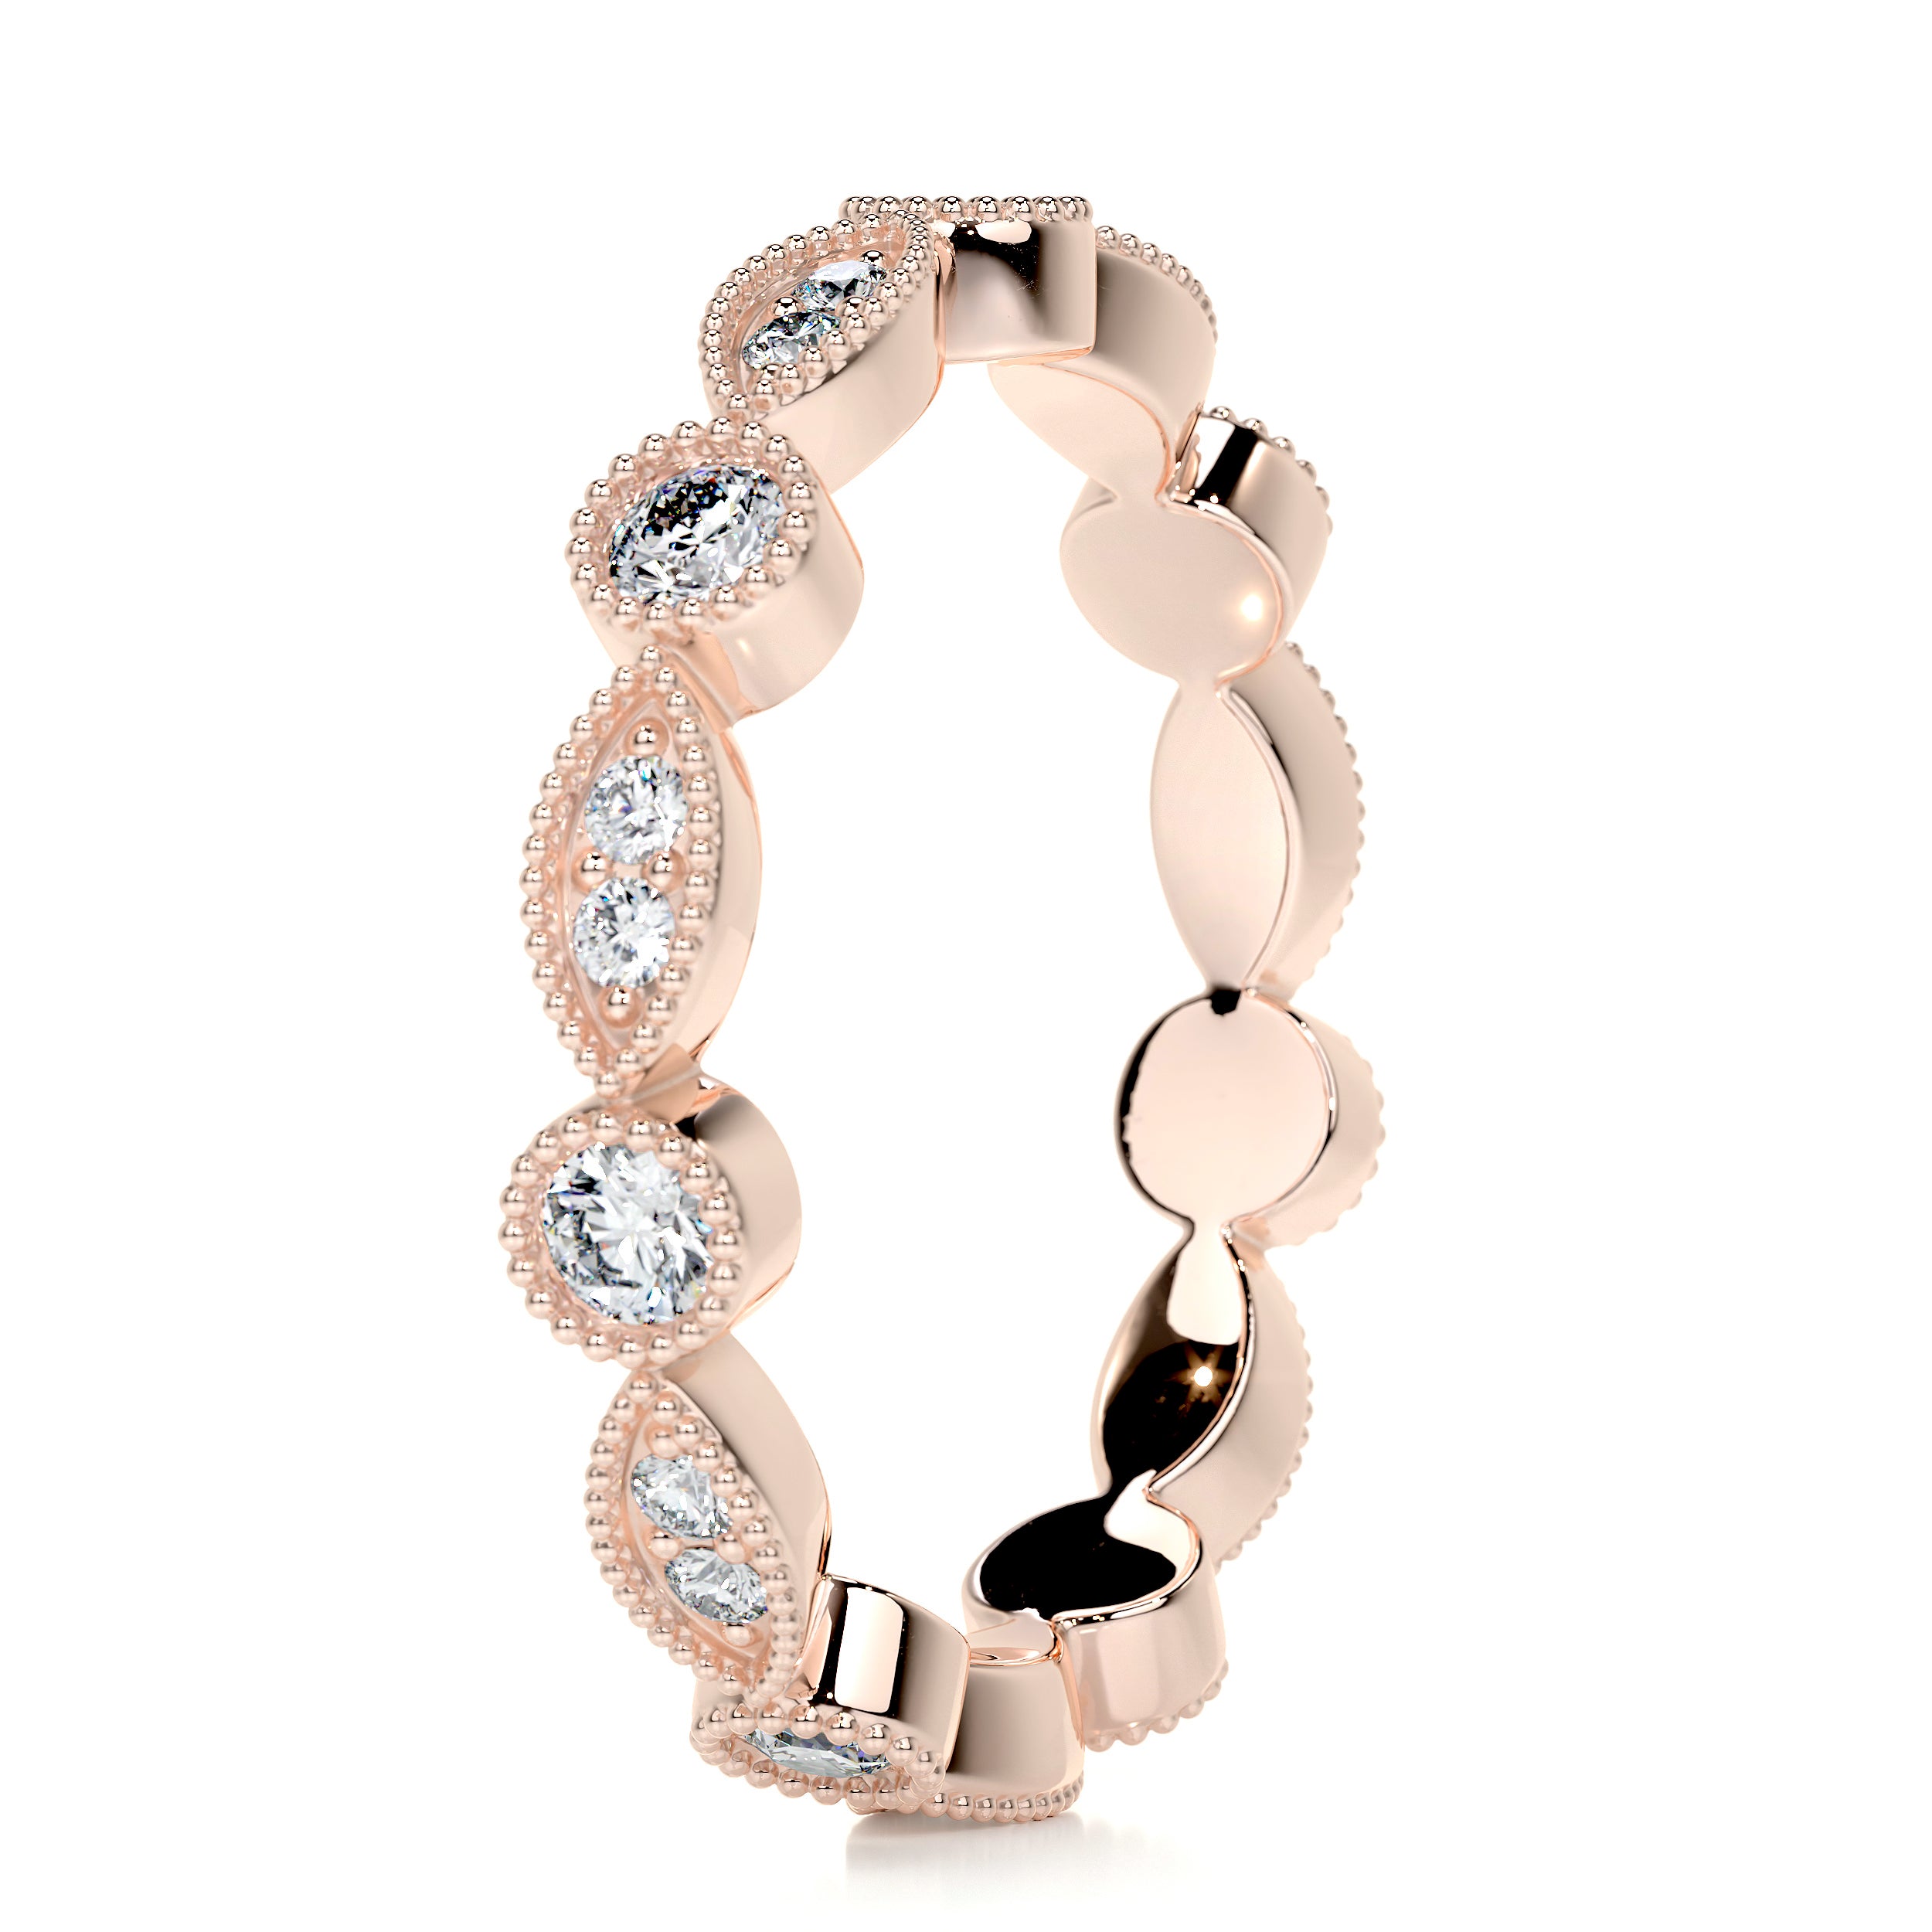 Amelia Eternity Wedding Ring   (0.5 Carat) -14K Rose Gold